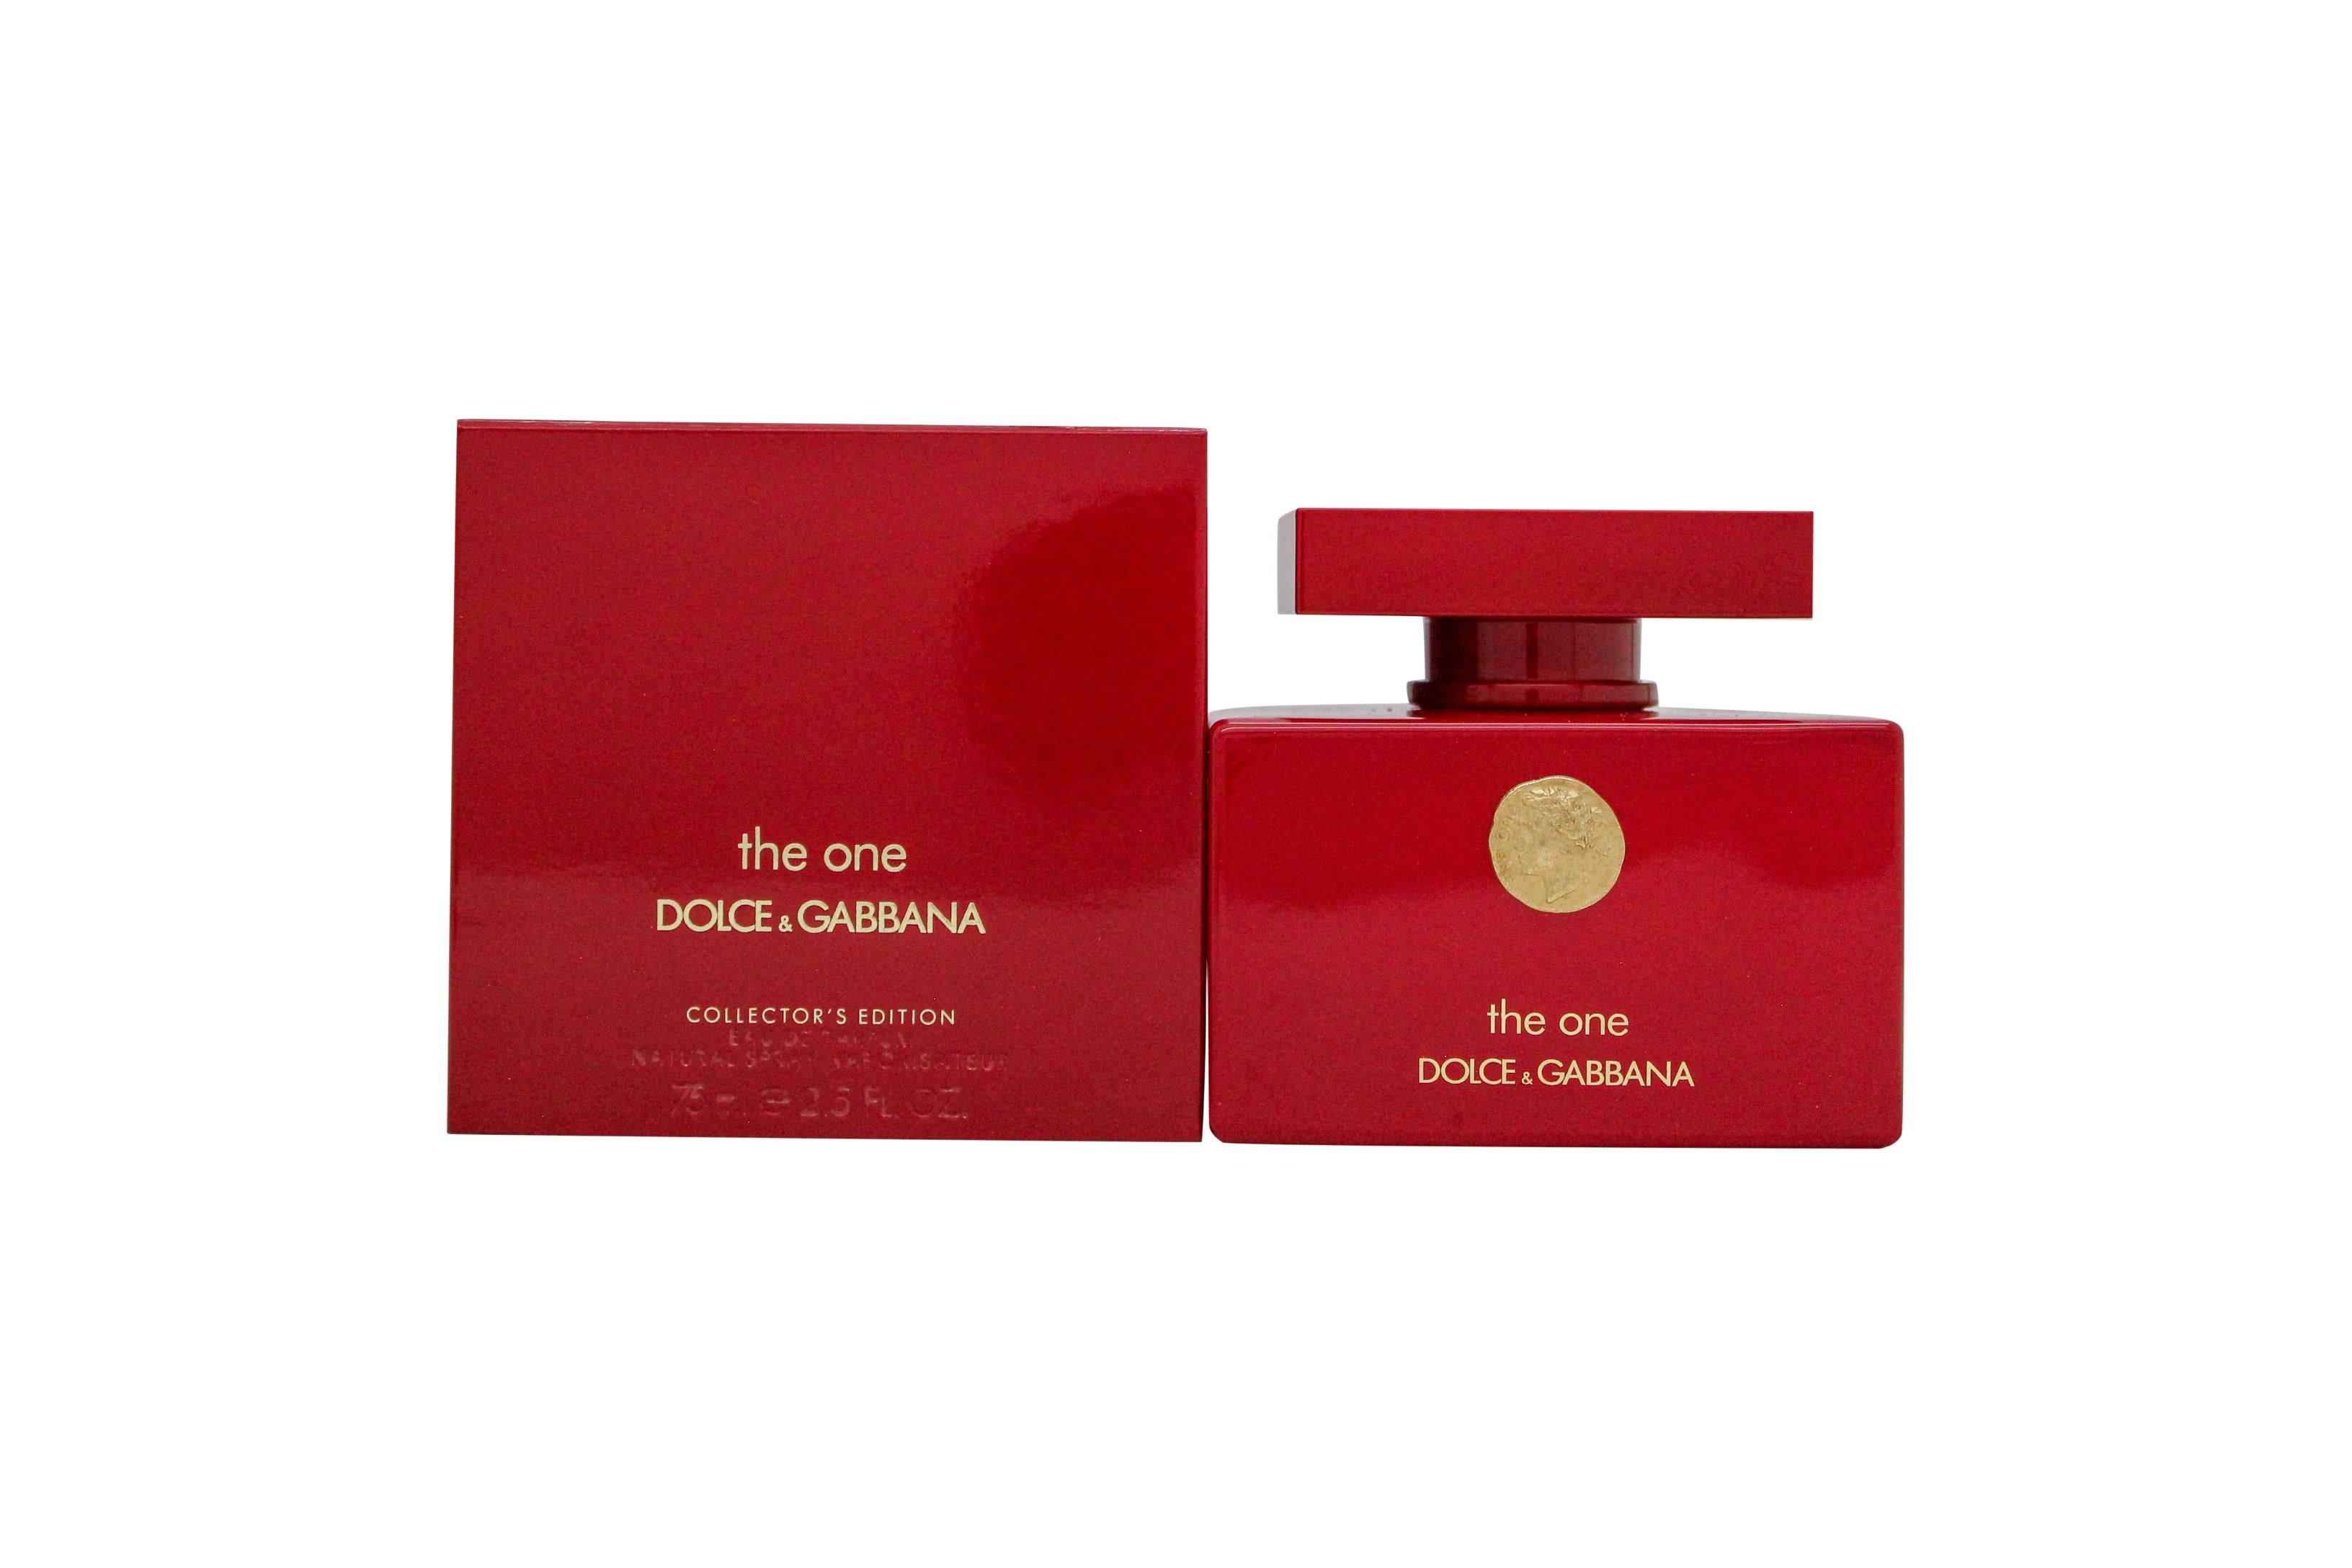 View Dolce Gabbana The One Collector Eau de Parfum 75ml Spray information